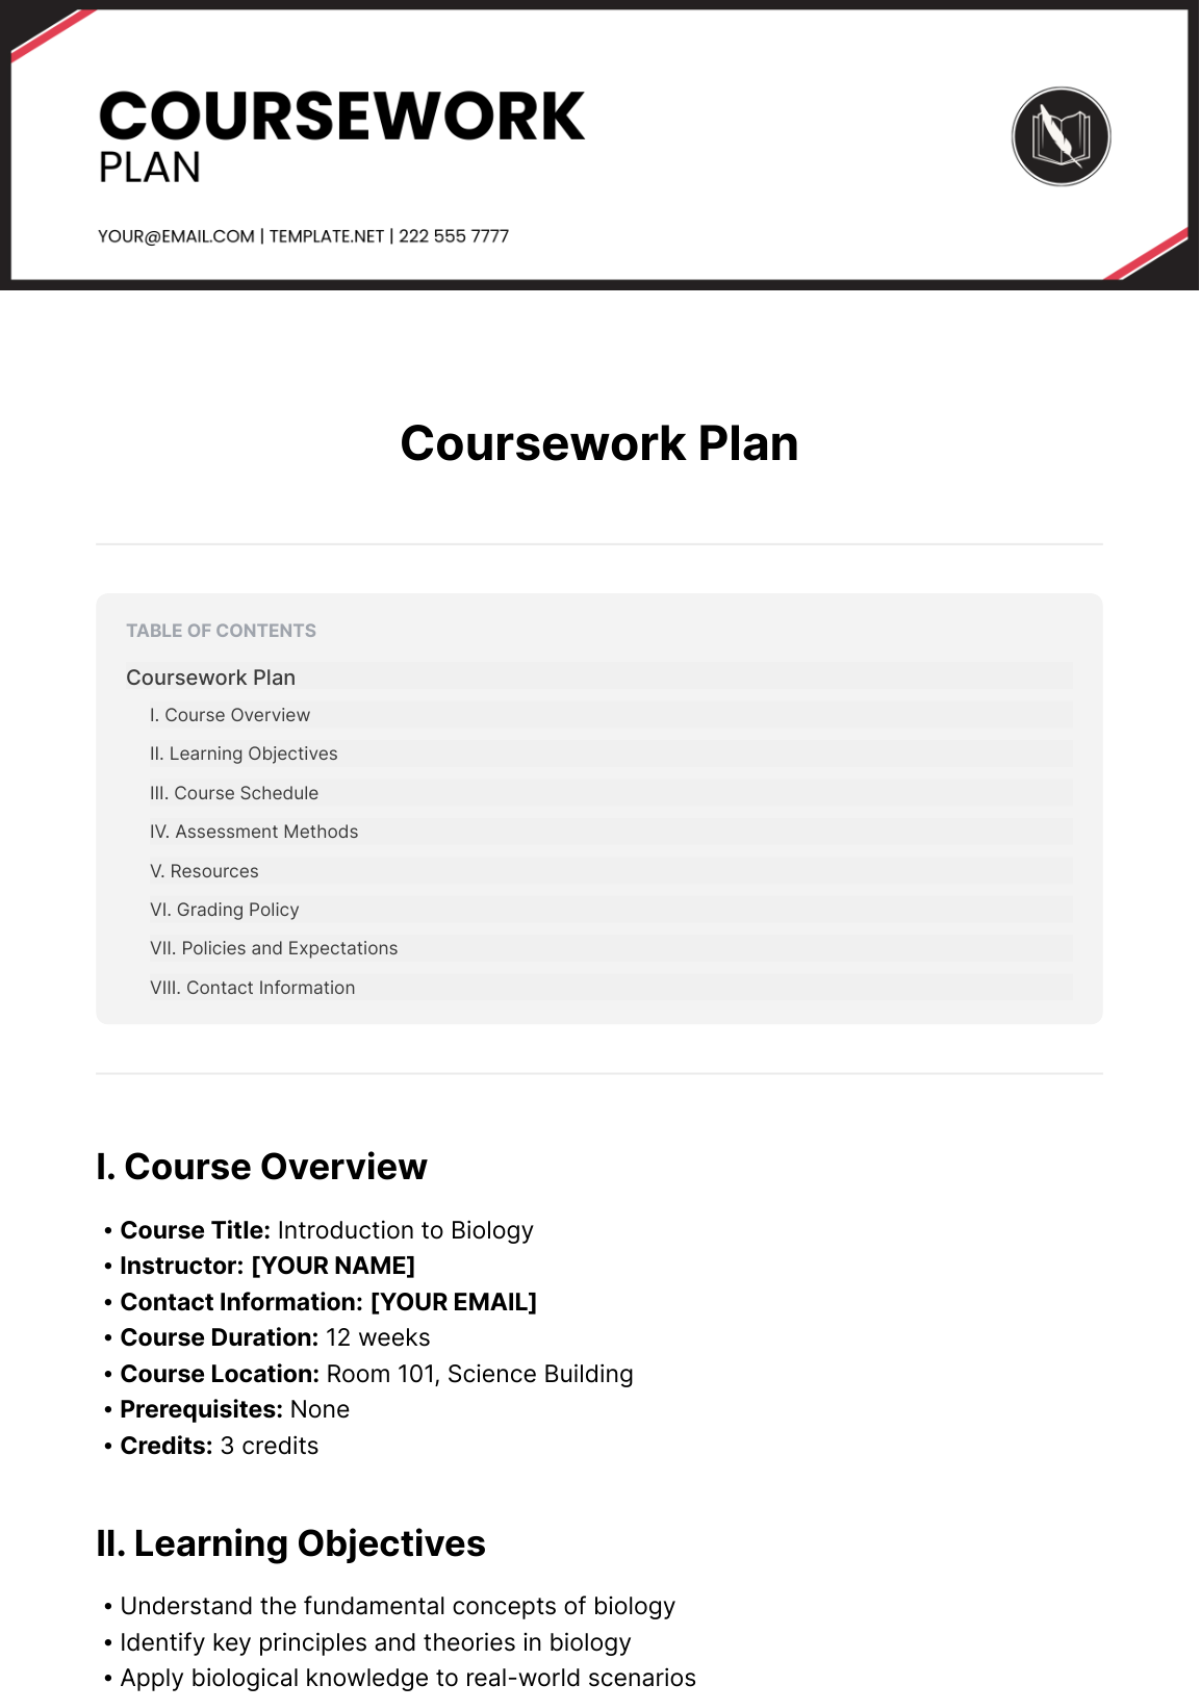 Coursework Plan Template